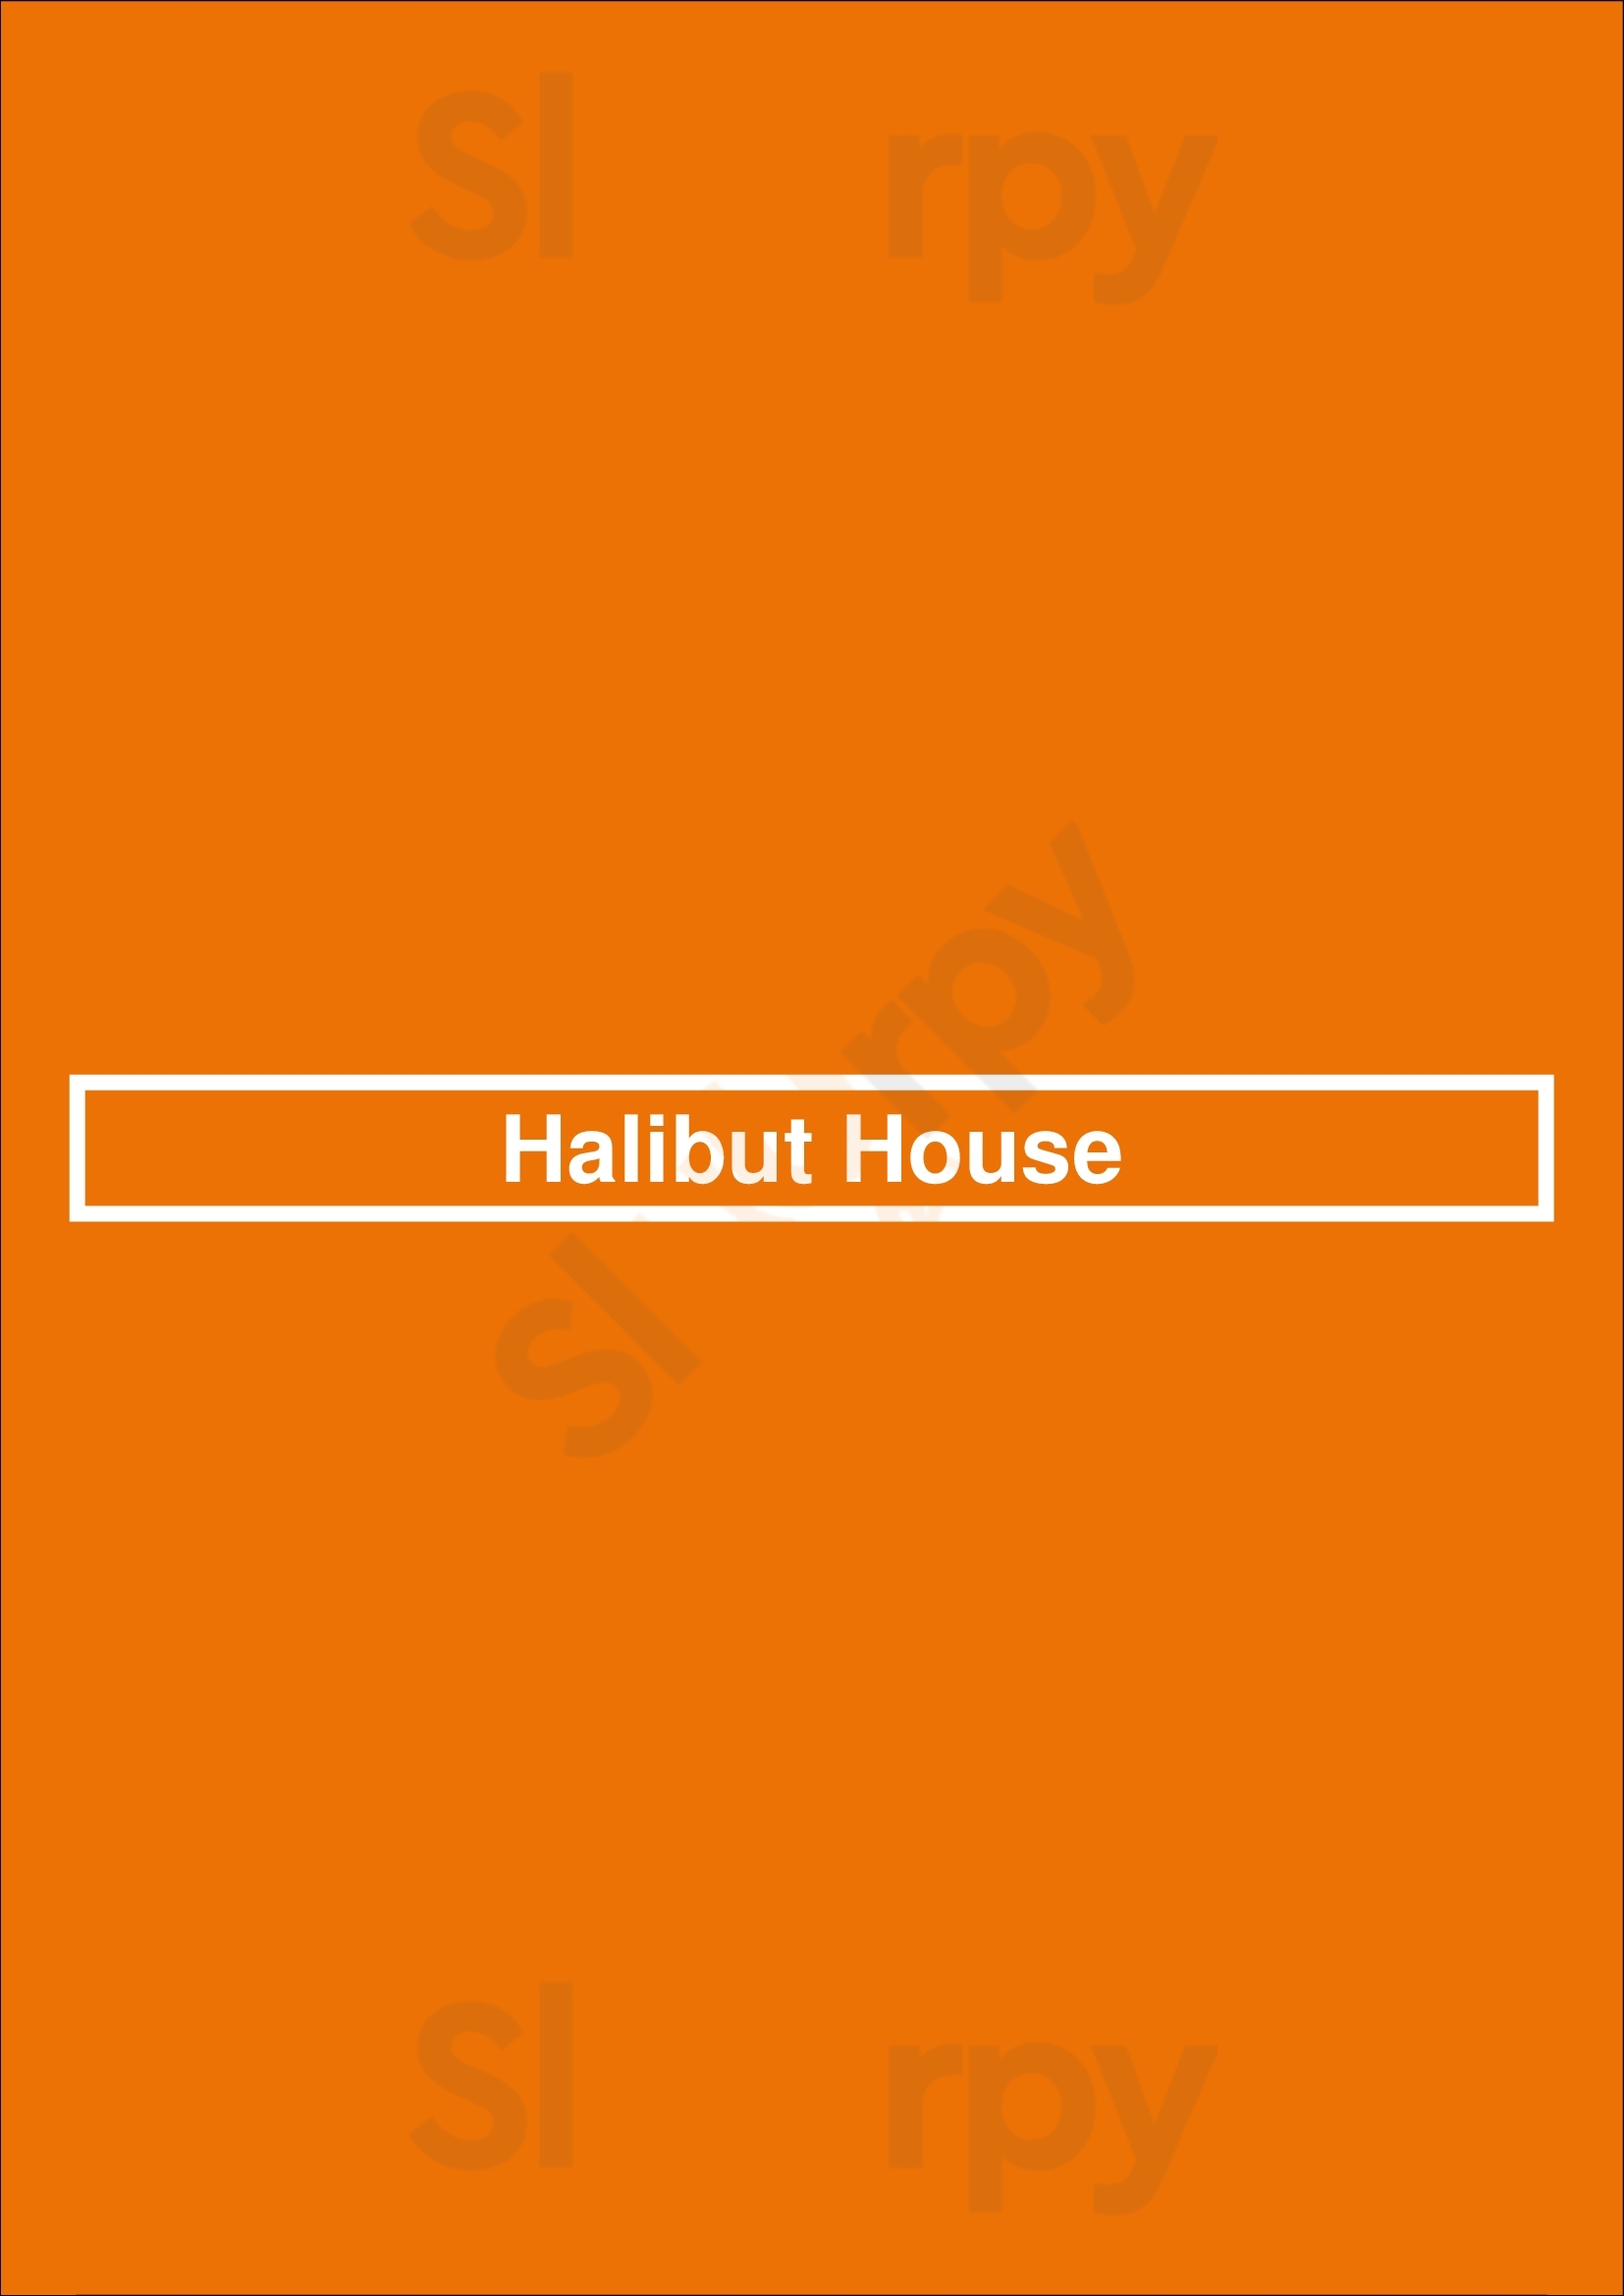 Halibut House Newmarket Menu - 1